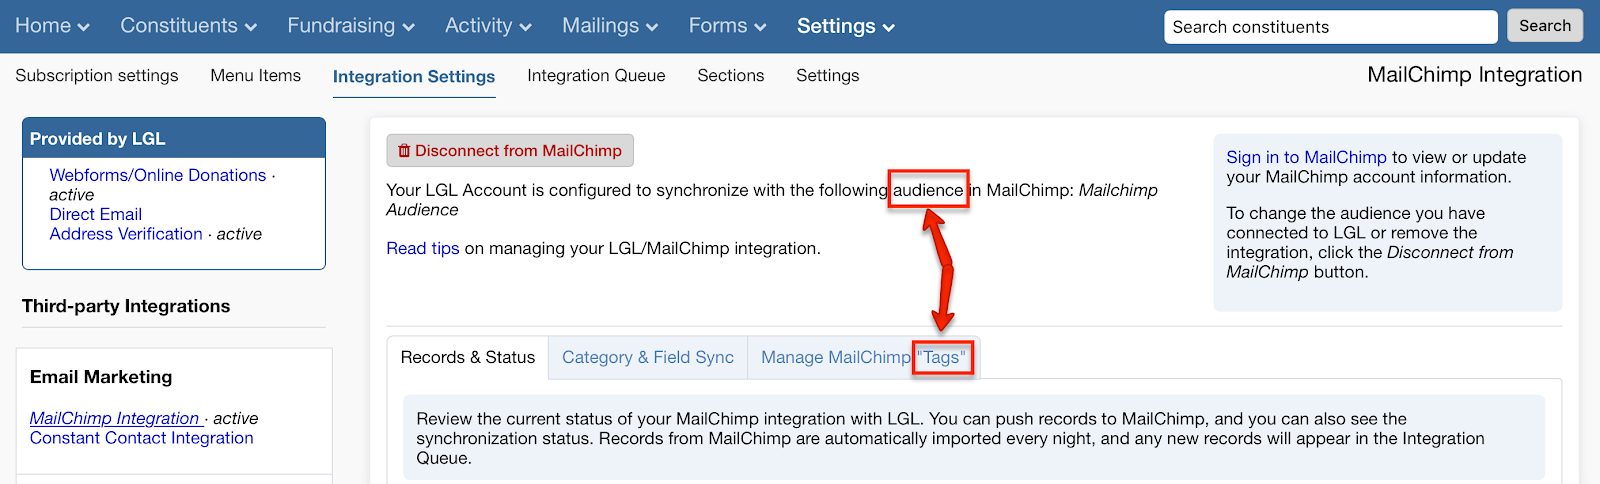 updated mailchimp terminology in lGL app